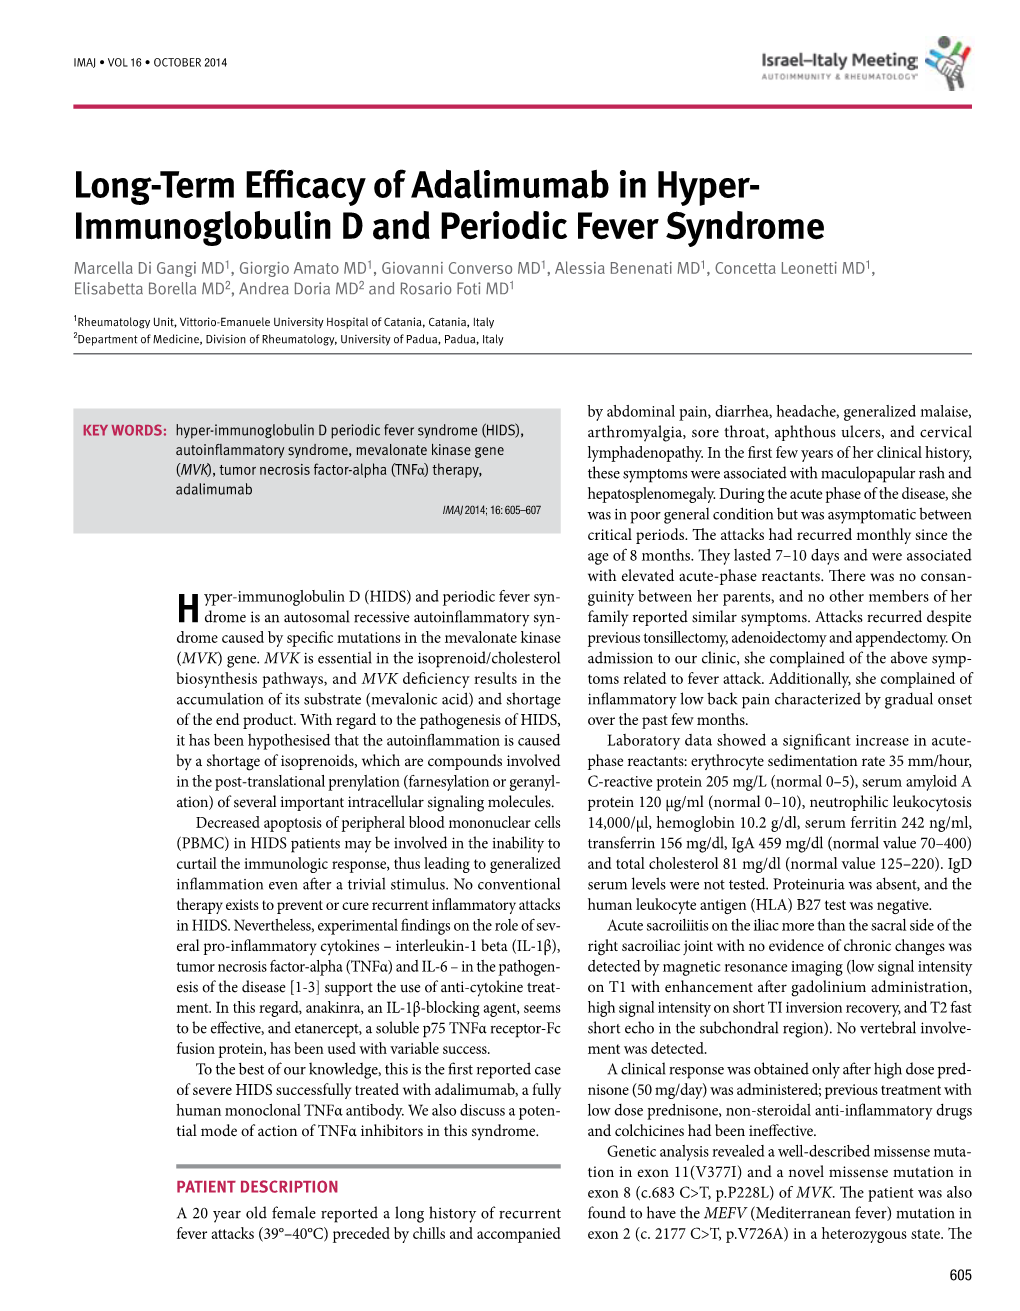 Long-Term Efficacy of Adalimumab in Hyper- Immunoglobulin D And